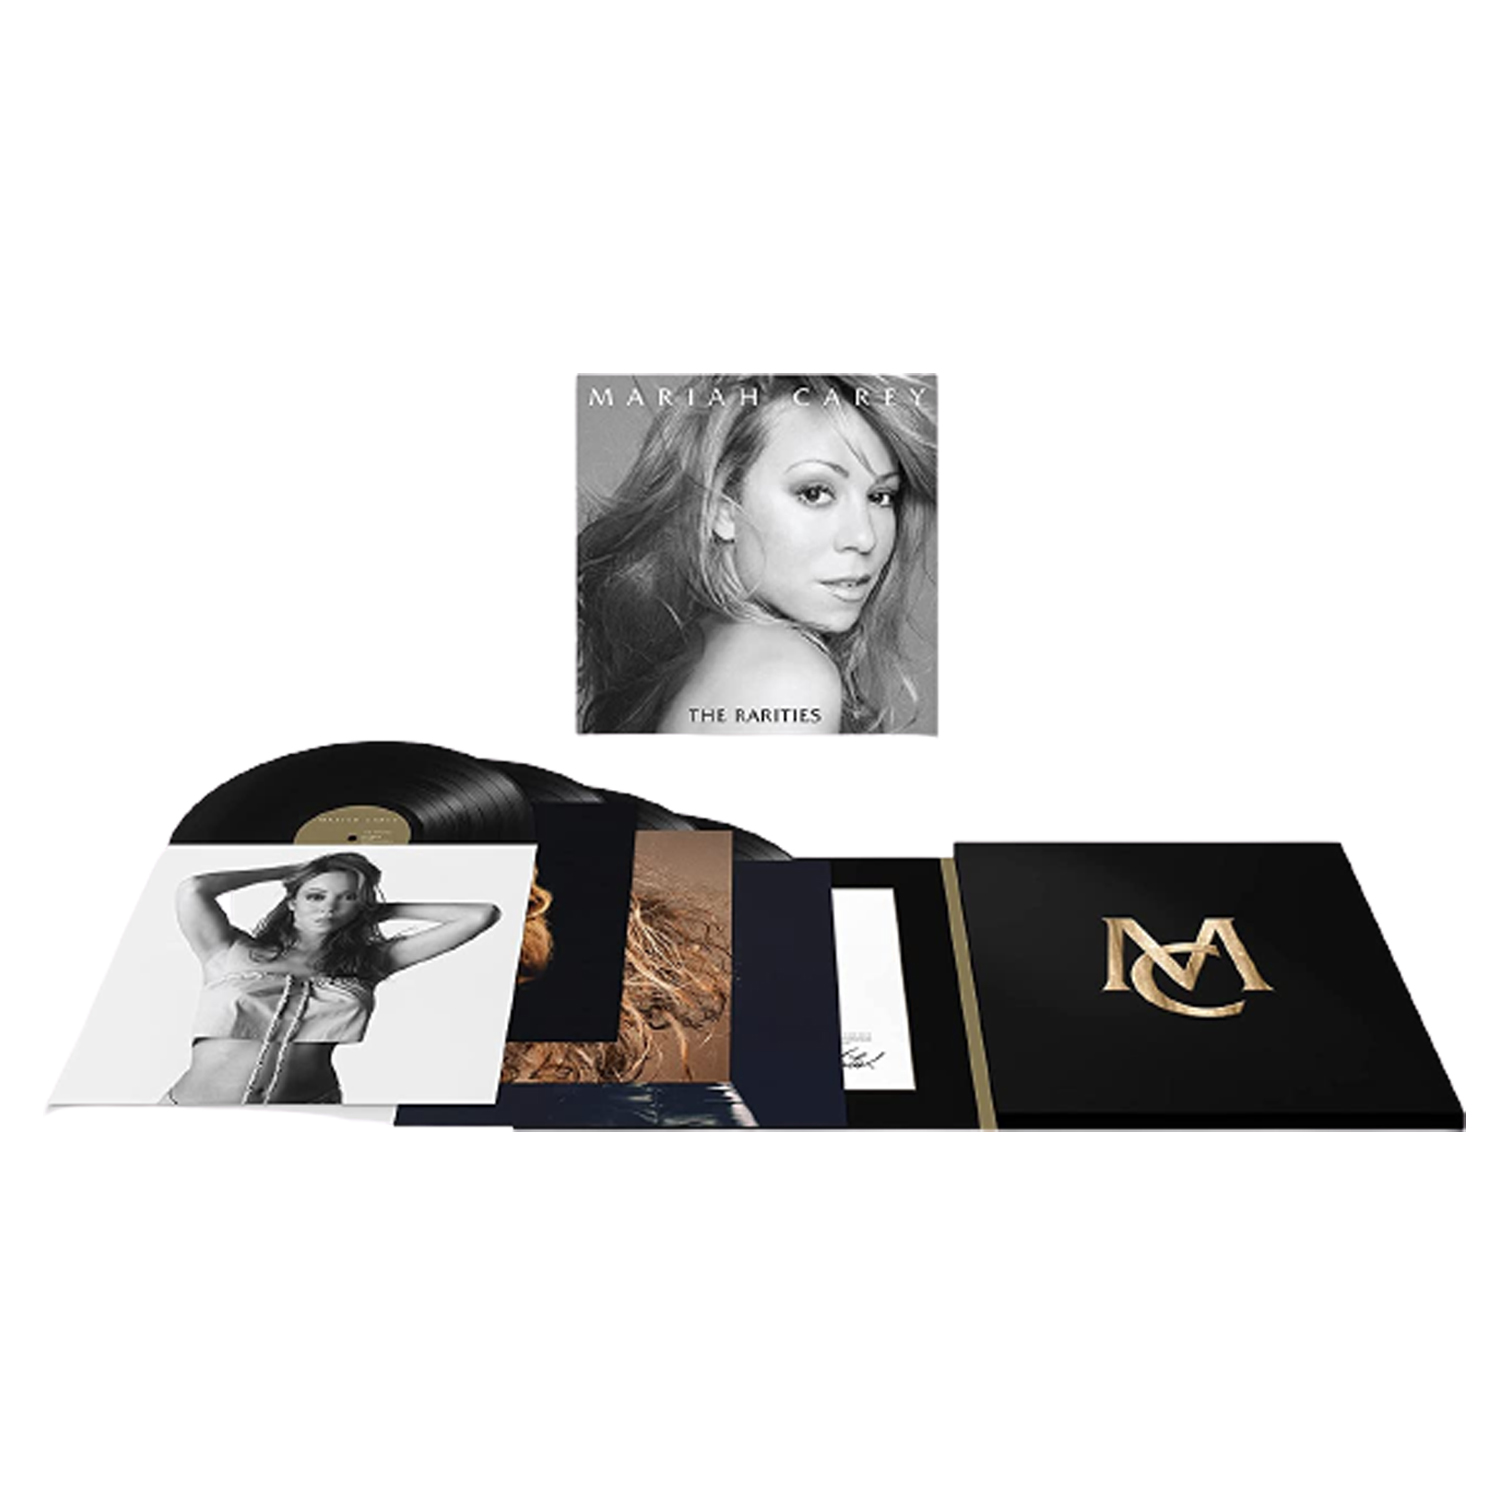 Mariah Carey (머라이어 캐리) - The Rarities [4LP]